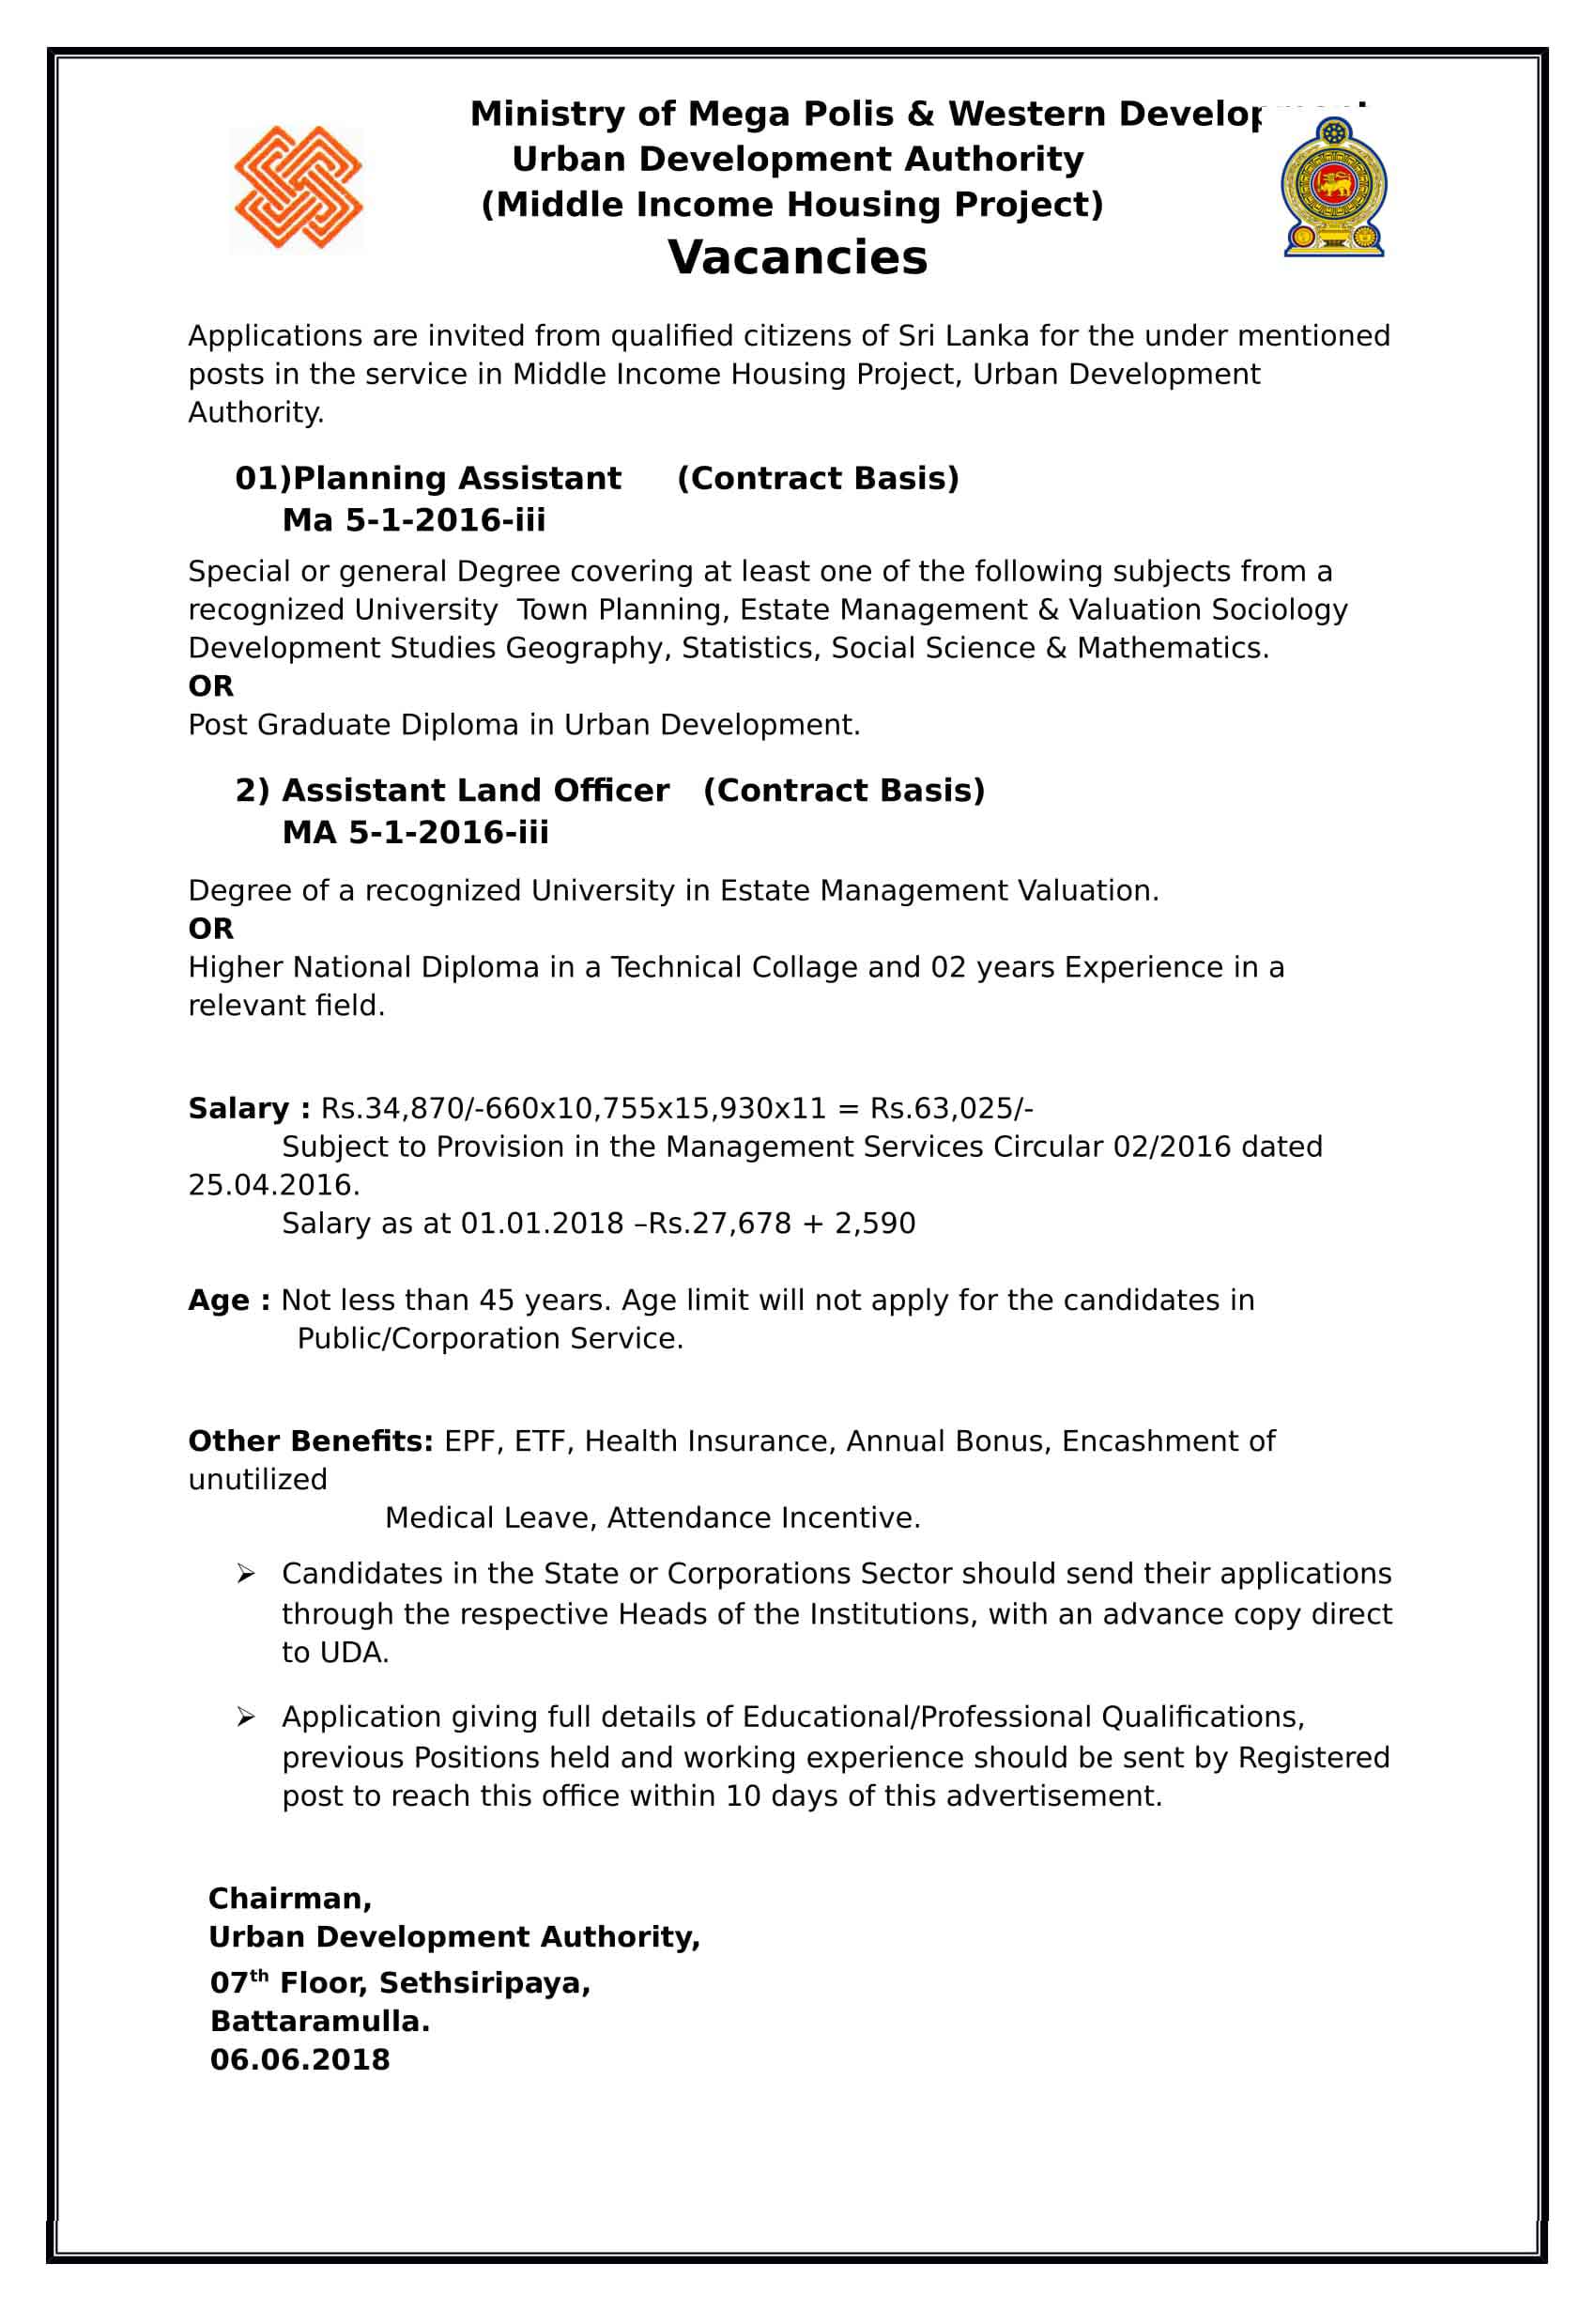 Planning Assistant / Assistant Land Officer - Urban Development Authority Jobs Vacancies